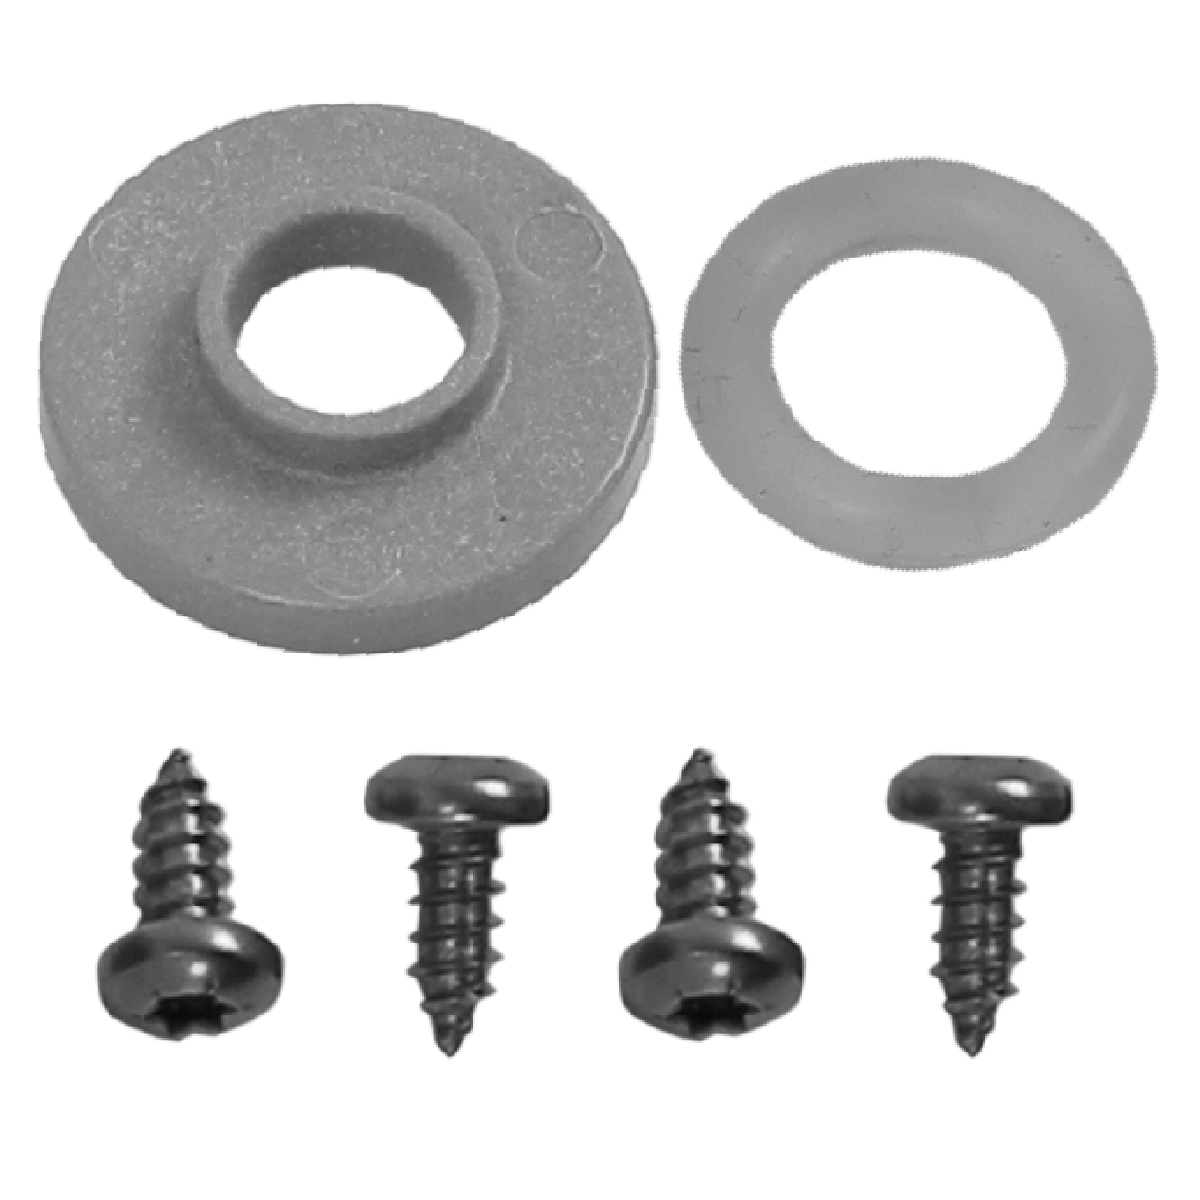 Impeller bearing, O-rings, screws